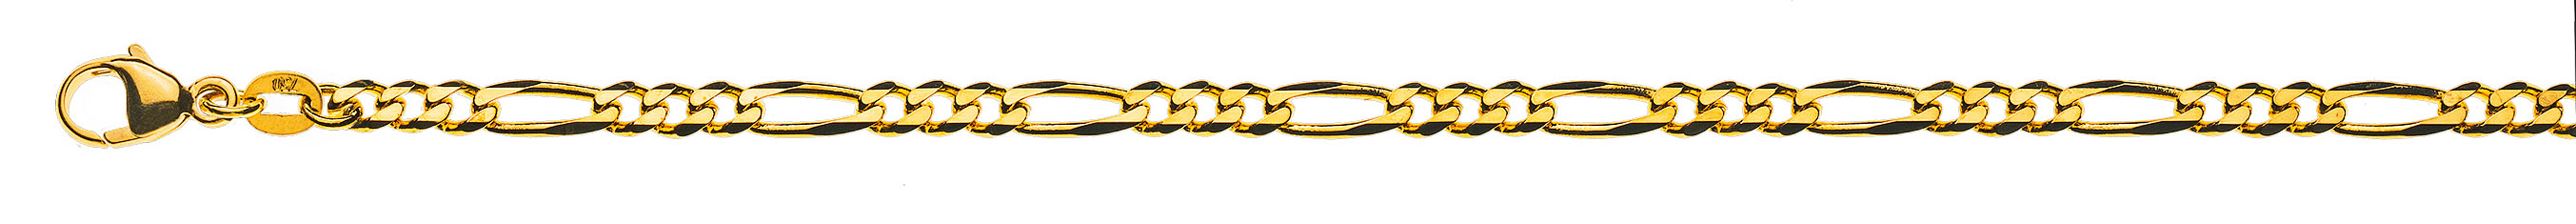 AURONOS Prestige Necklace yellow gold 18K Figaro necklace 45cm 3.4mm